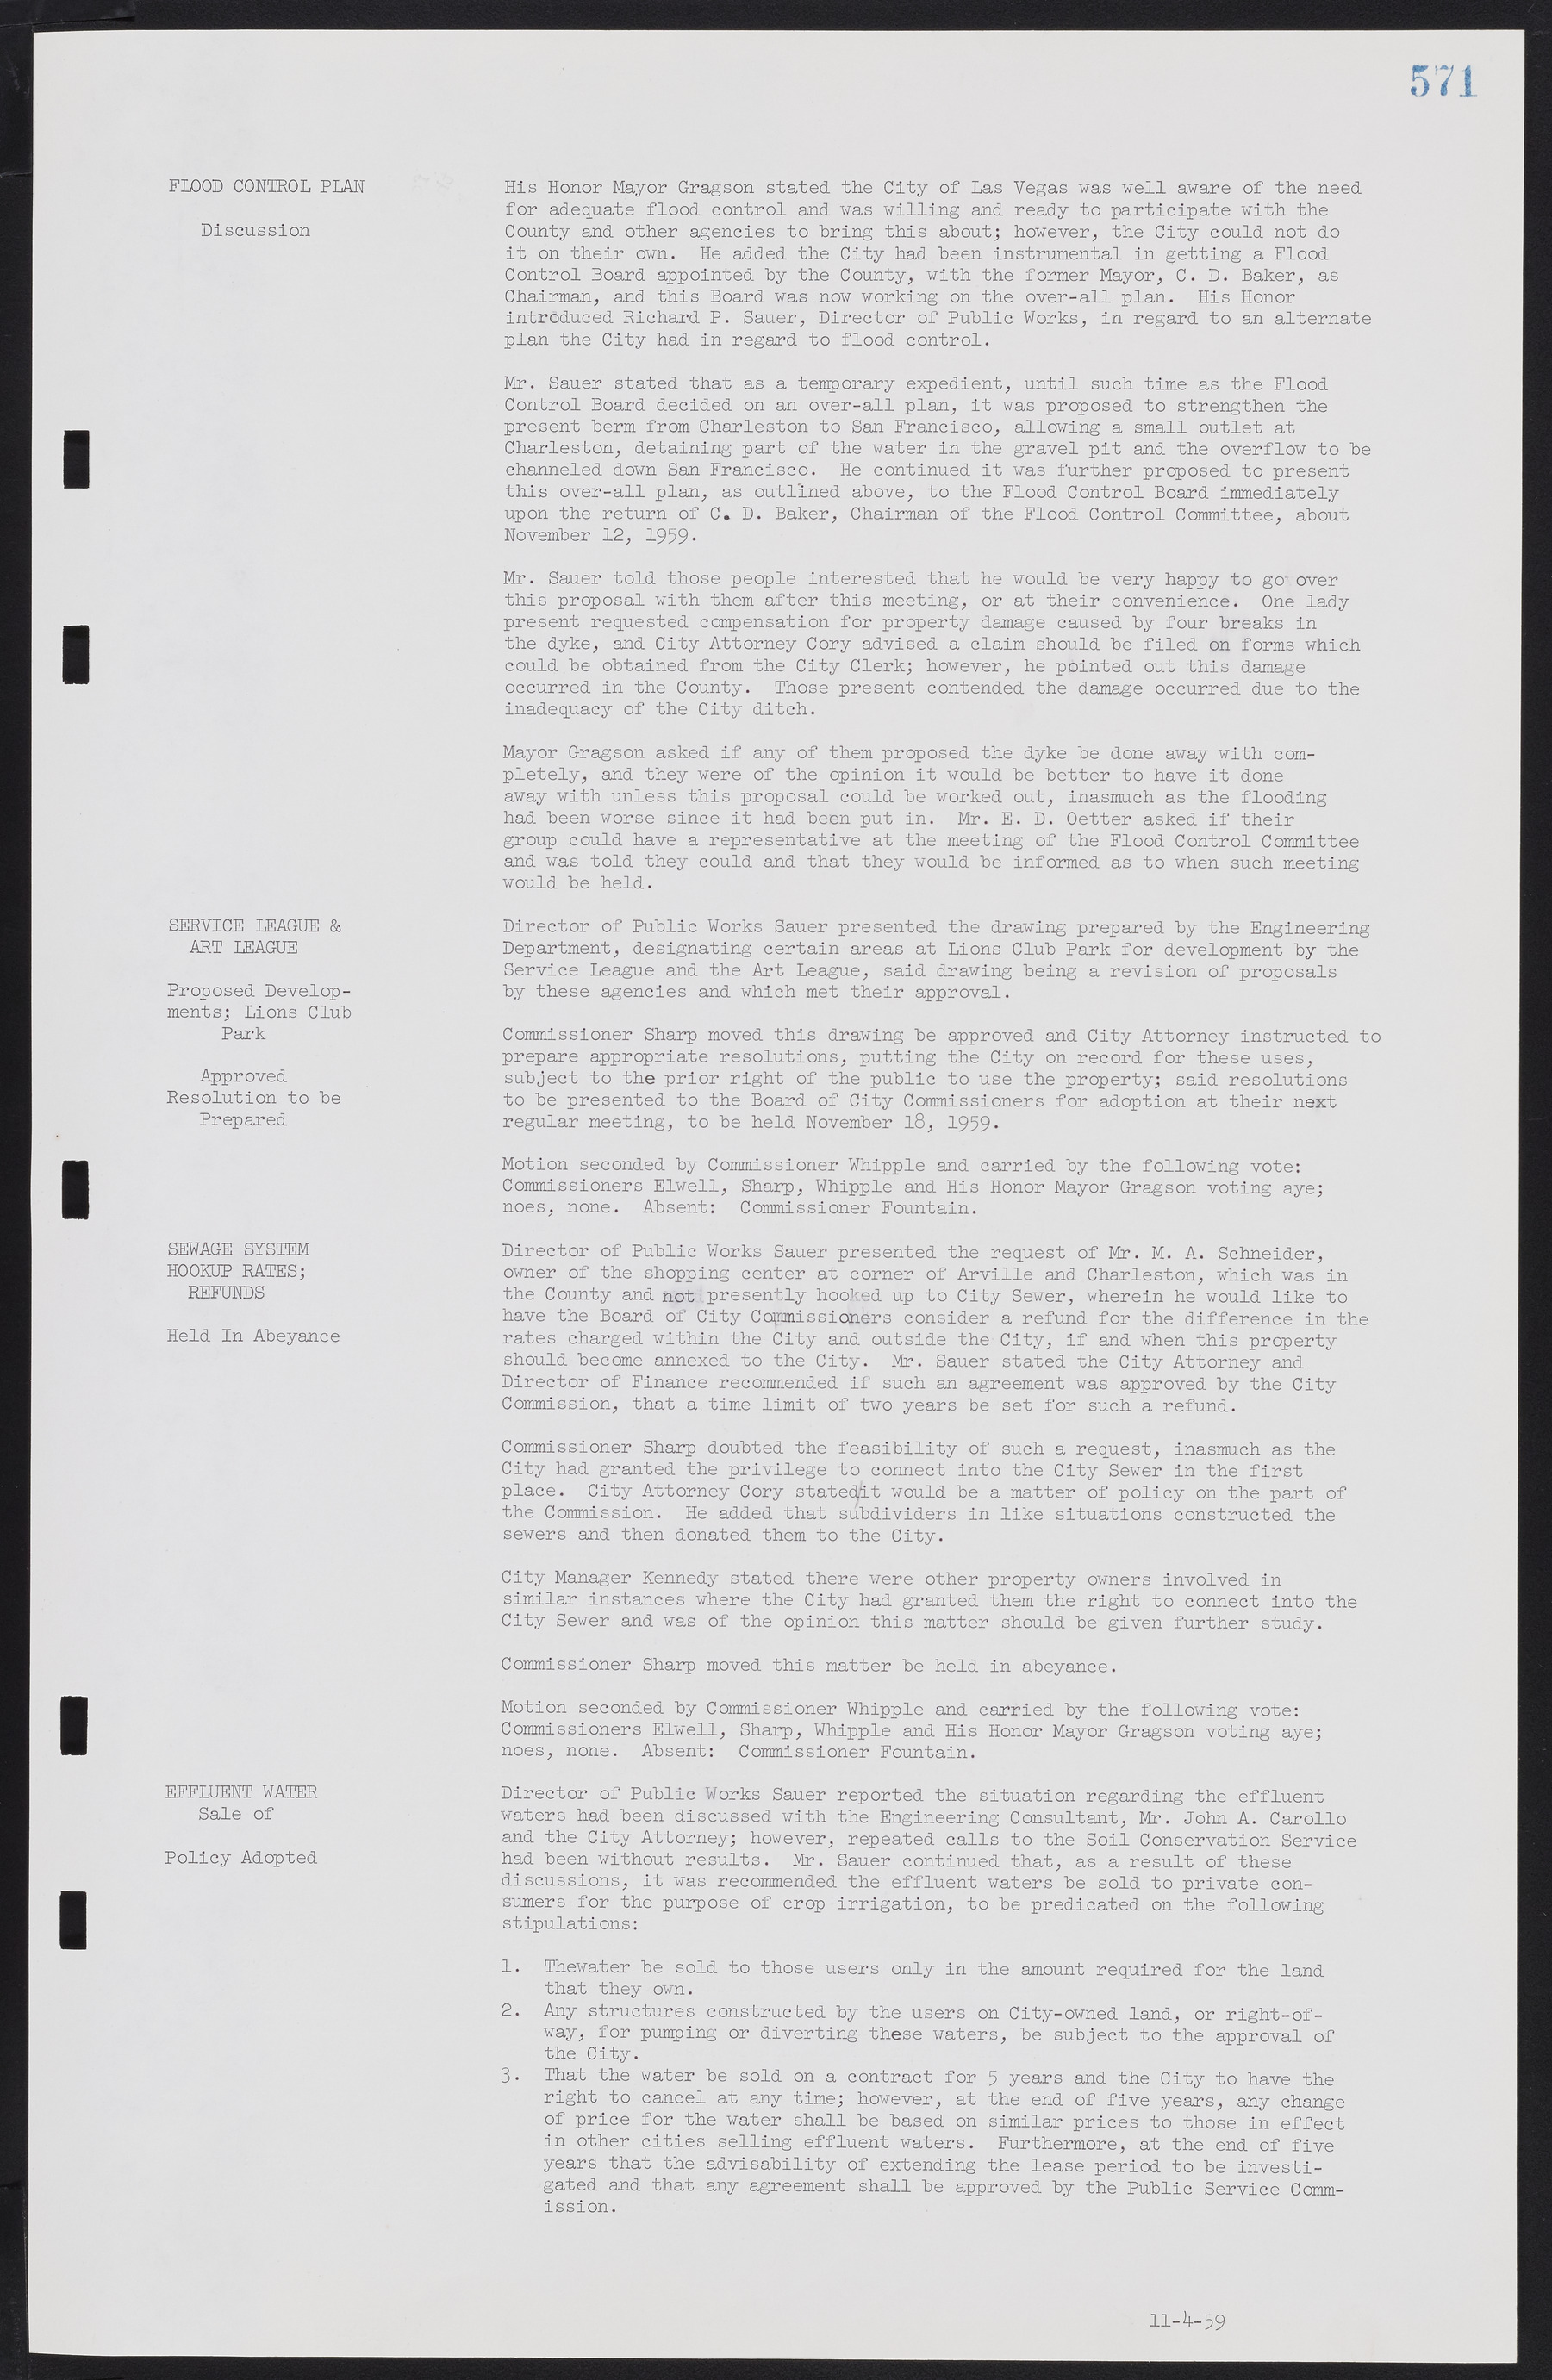 Las Vegas City Commission Minutes, November 20, 1957 to December 2, 1959, lvc000011-607